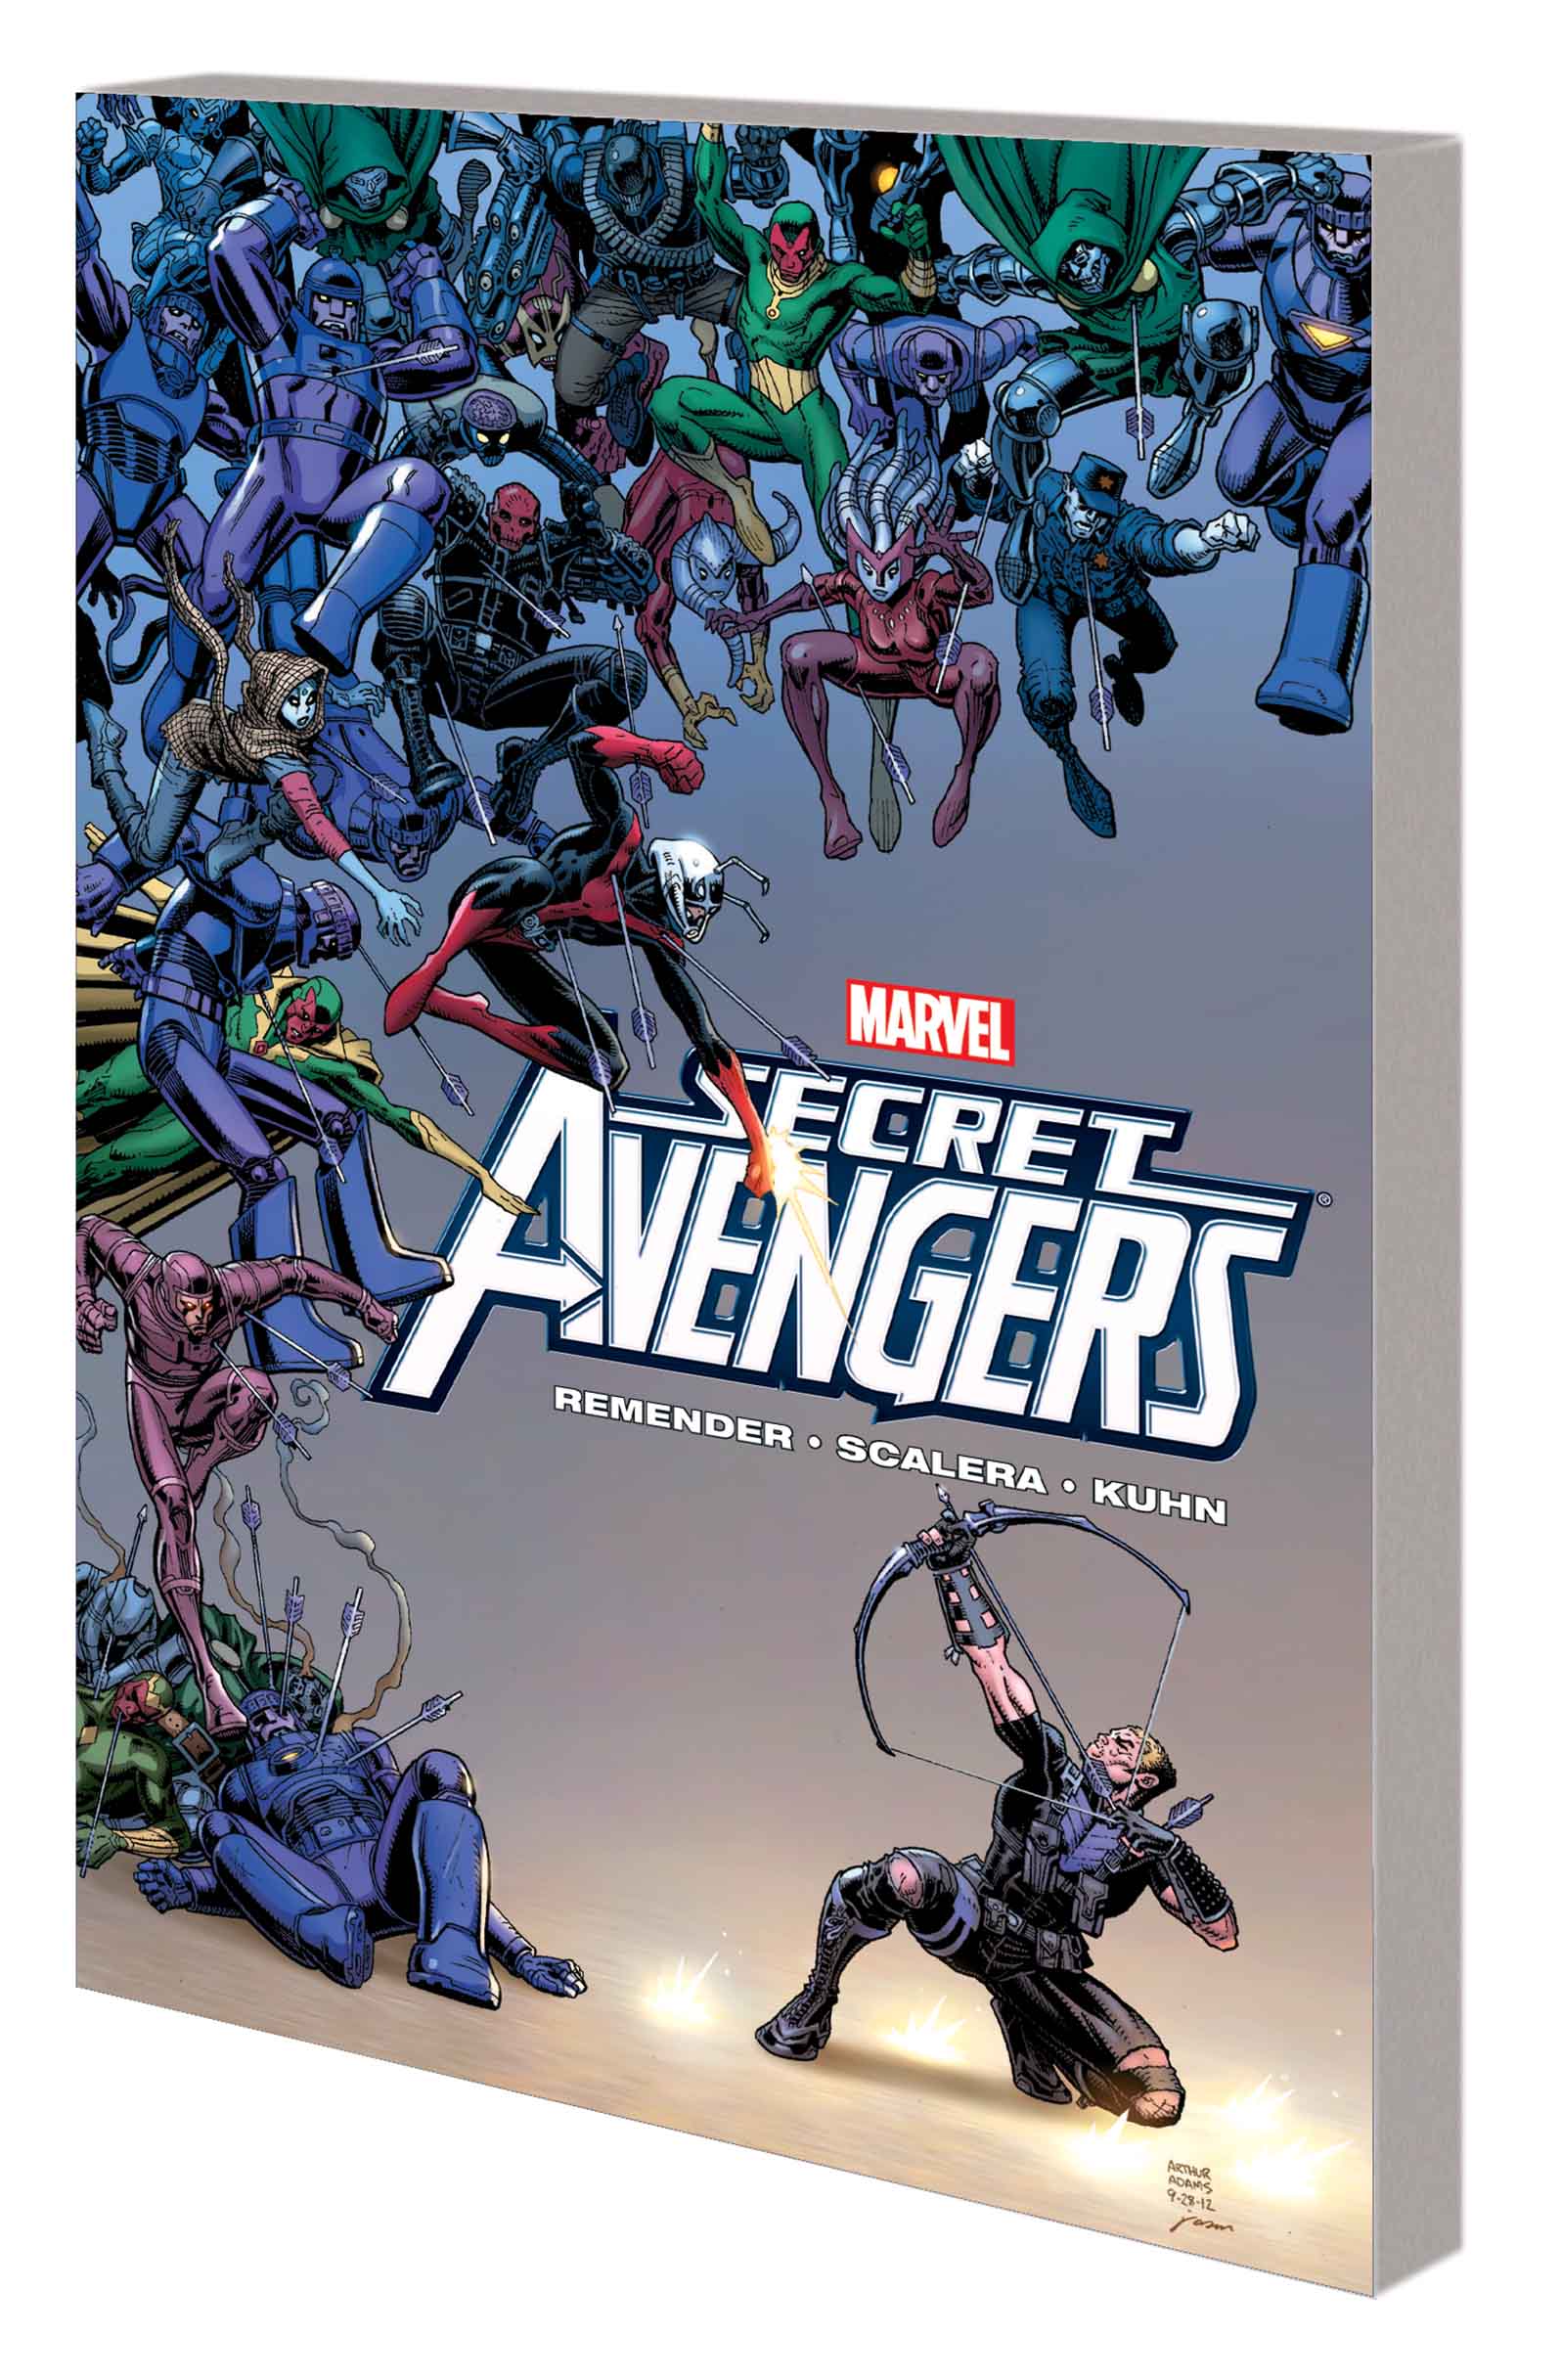 Secret Avengers by Rick Remender Vol. 3 (Trade Paperback)